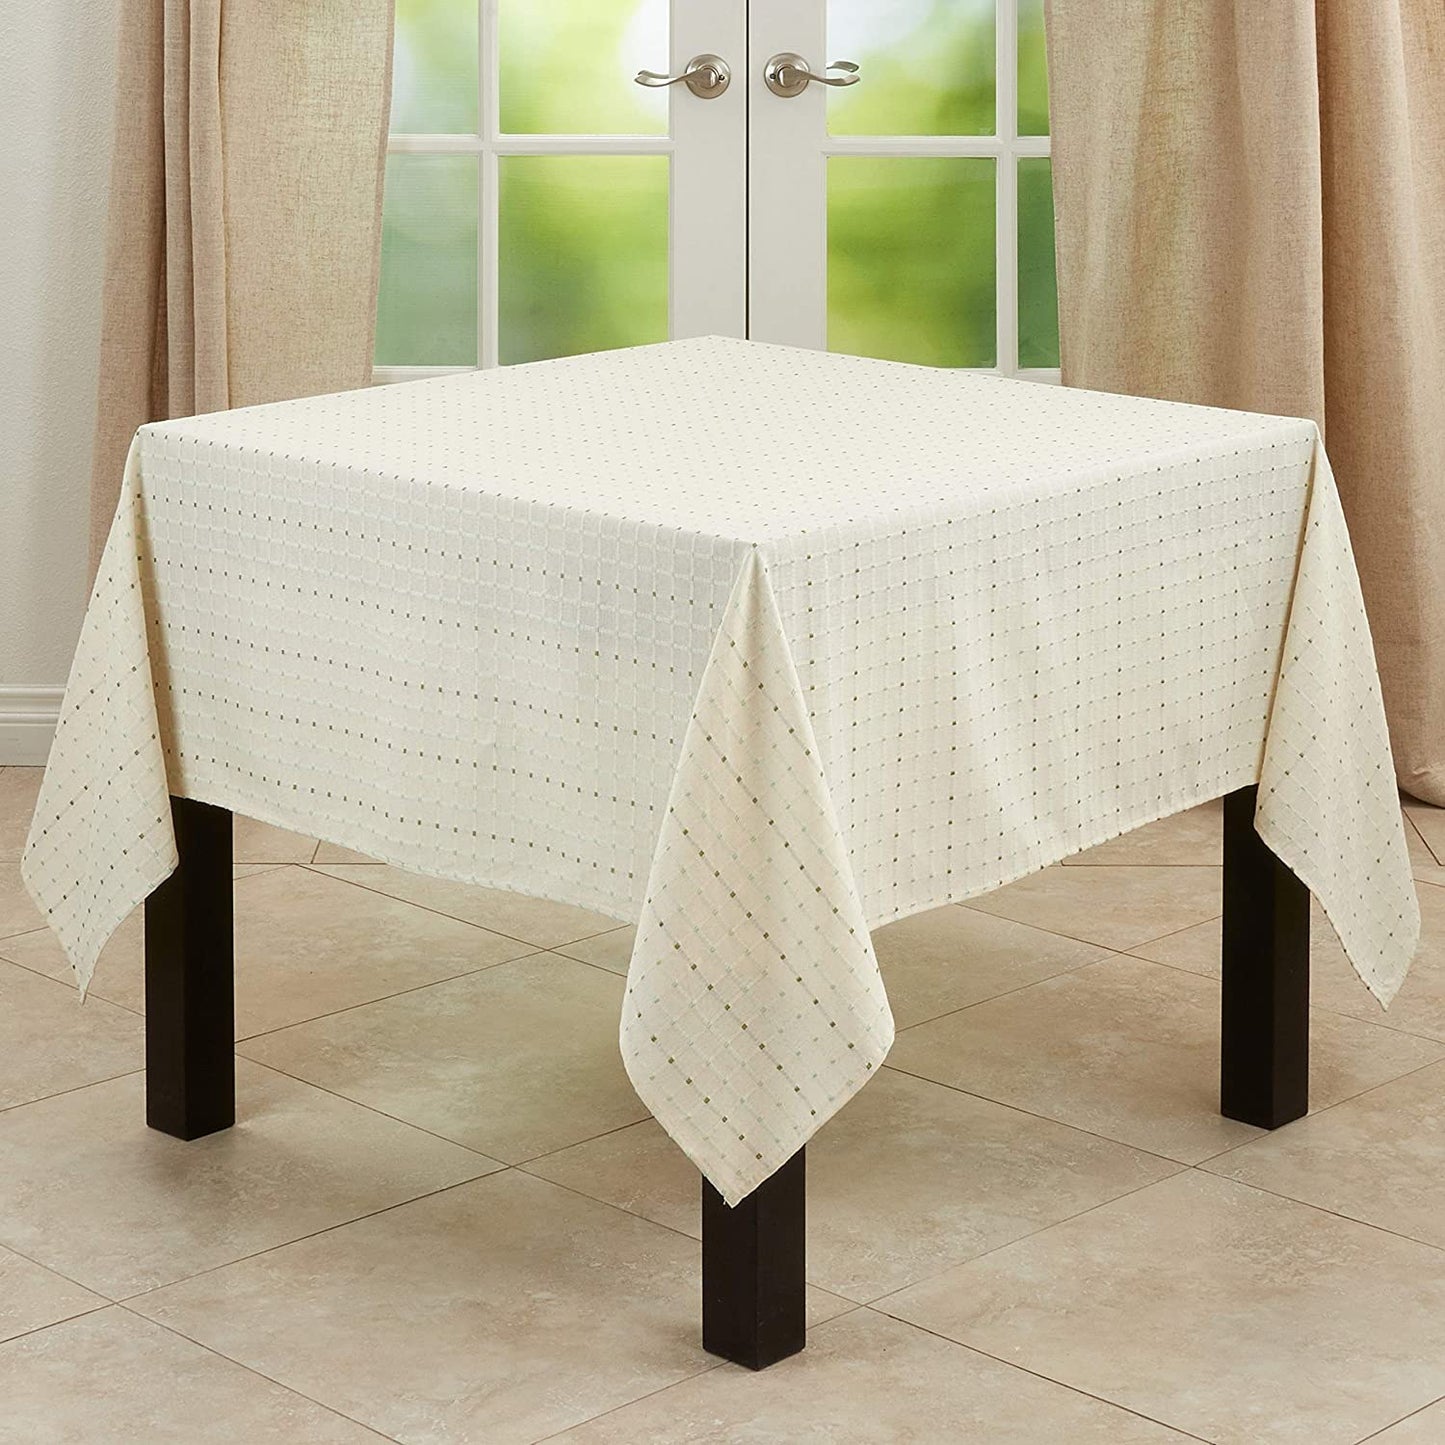 Saro Lifestyle Stitched Line Tablecloth 70" Square, White